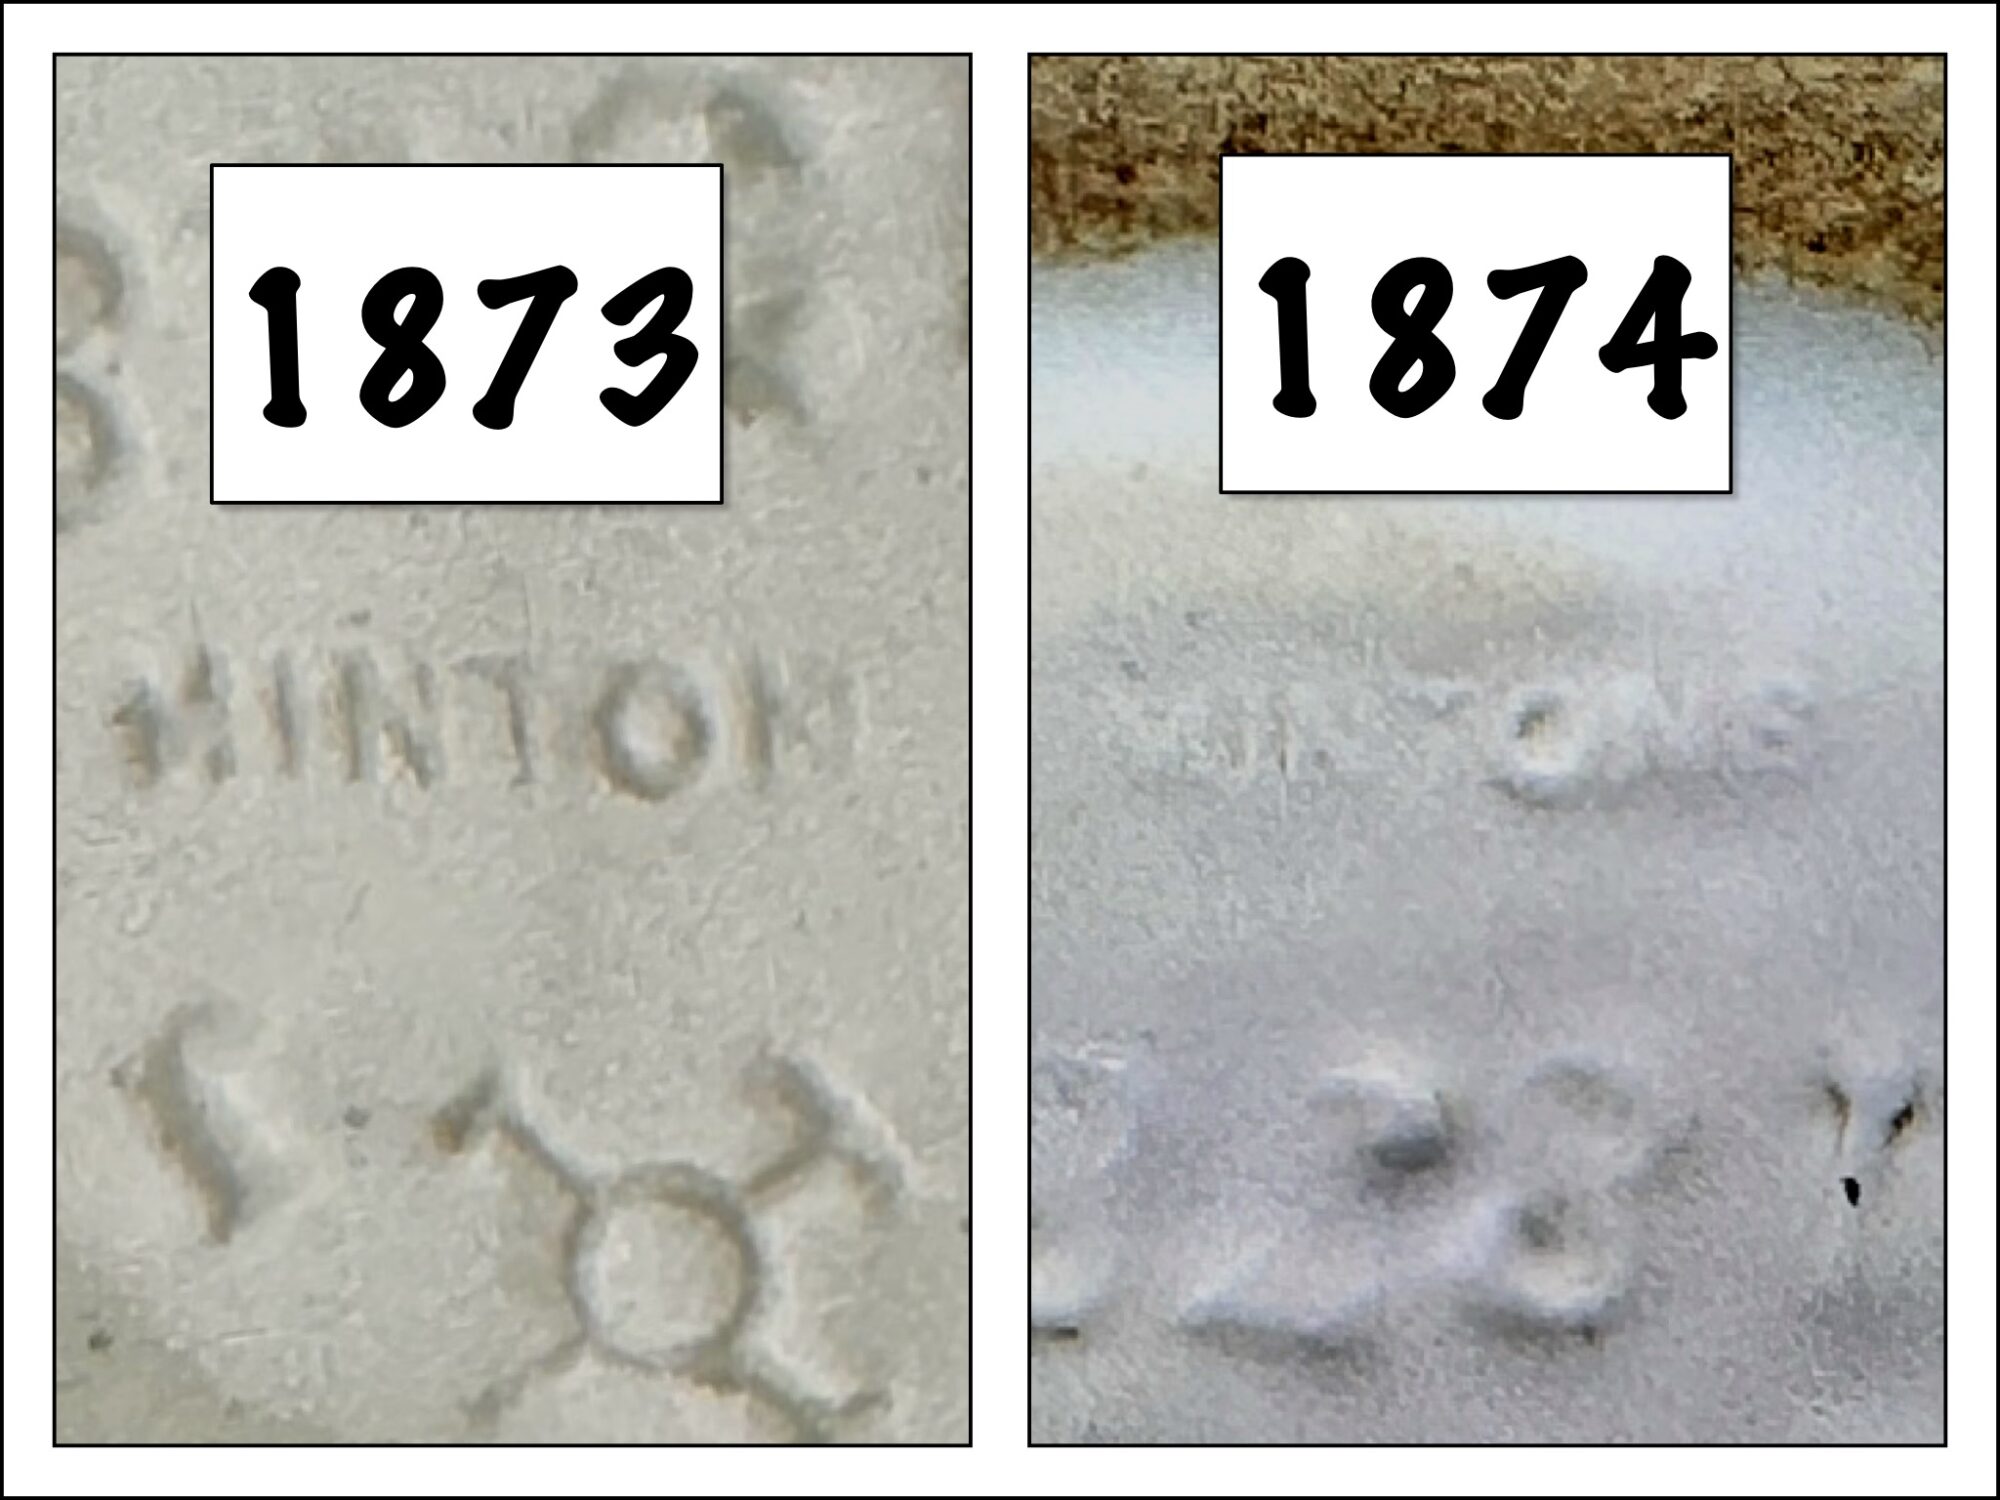 MINTON MINTON'S marks, 1873 1874